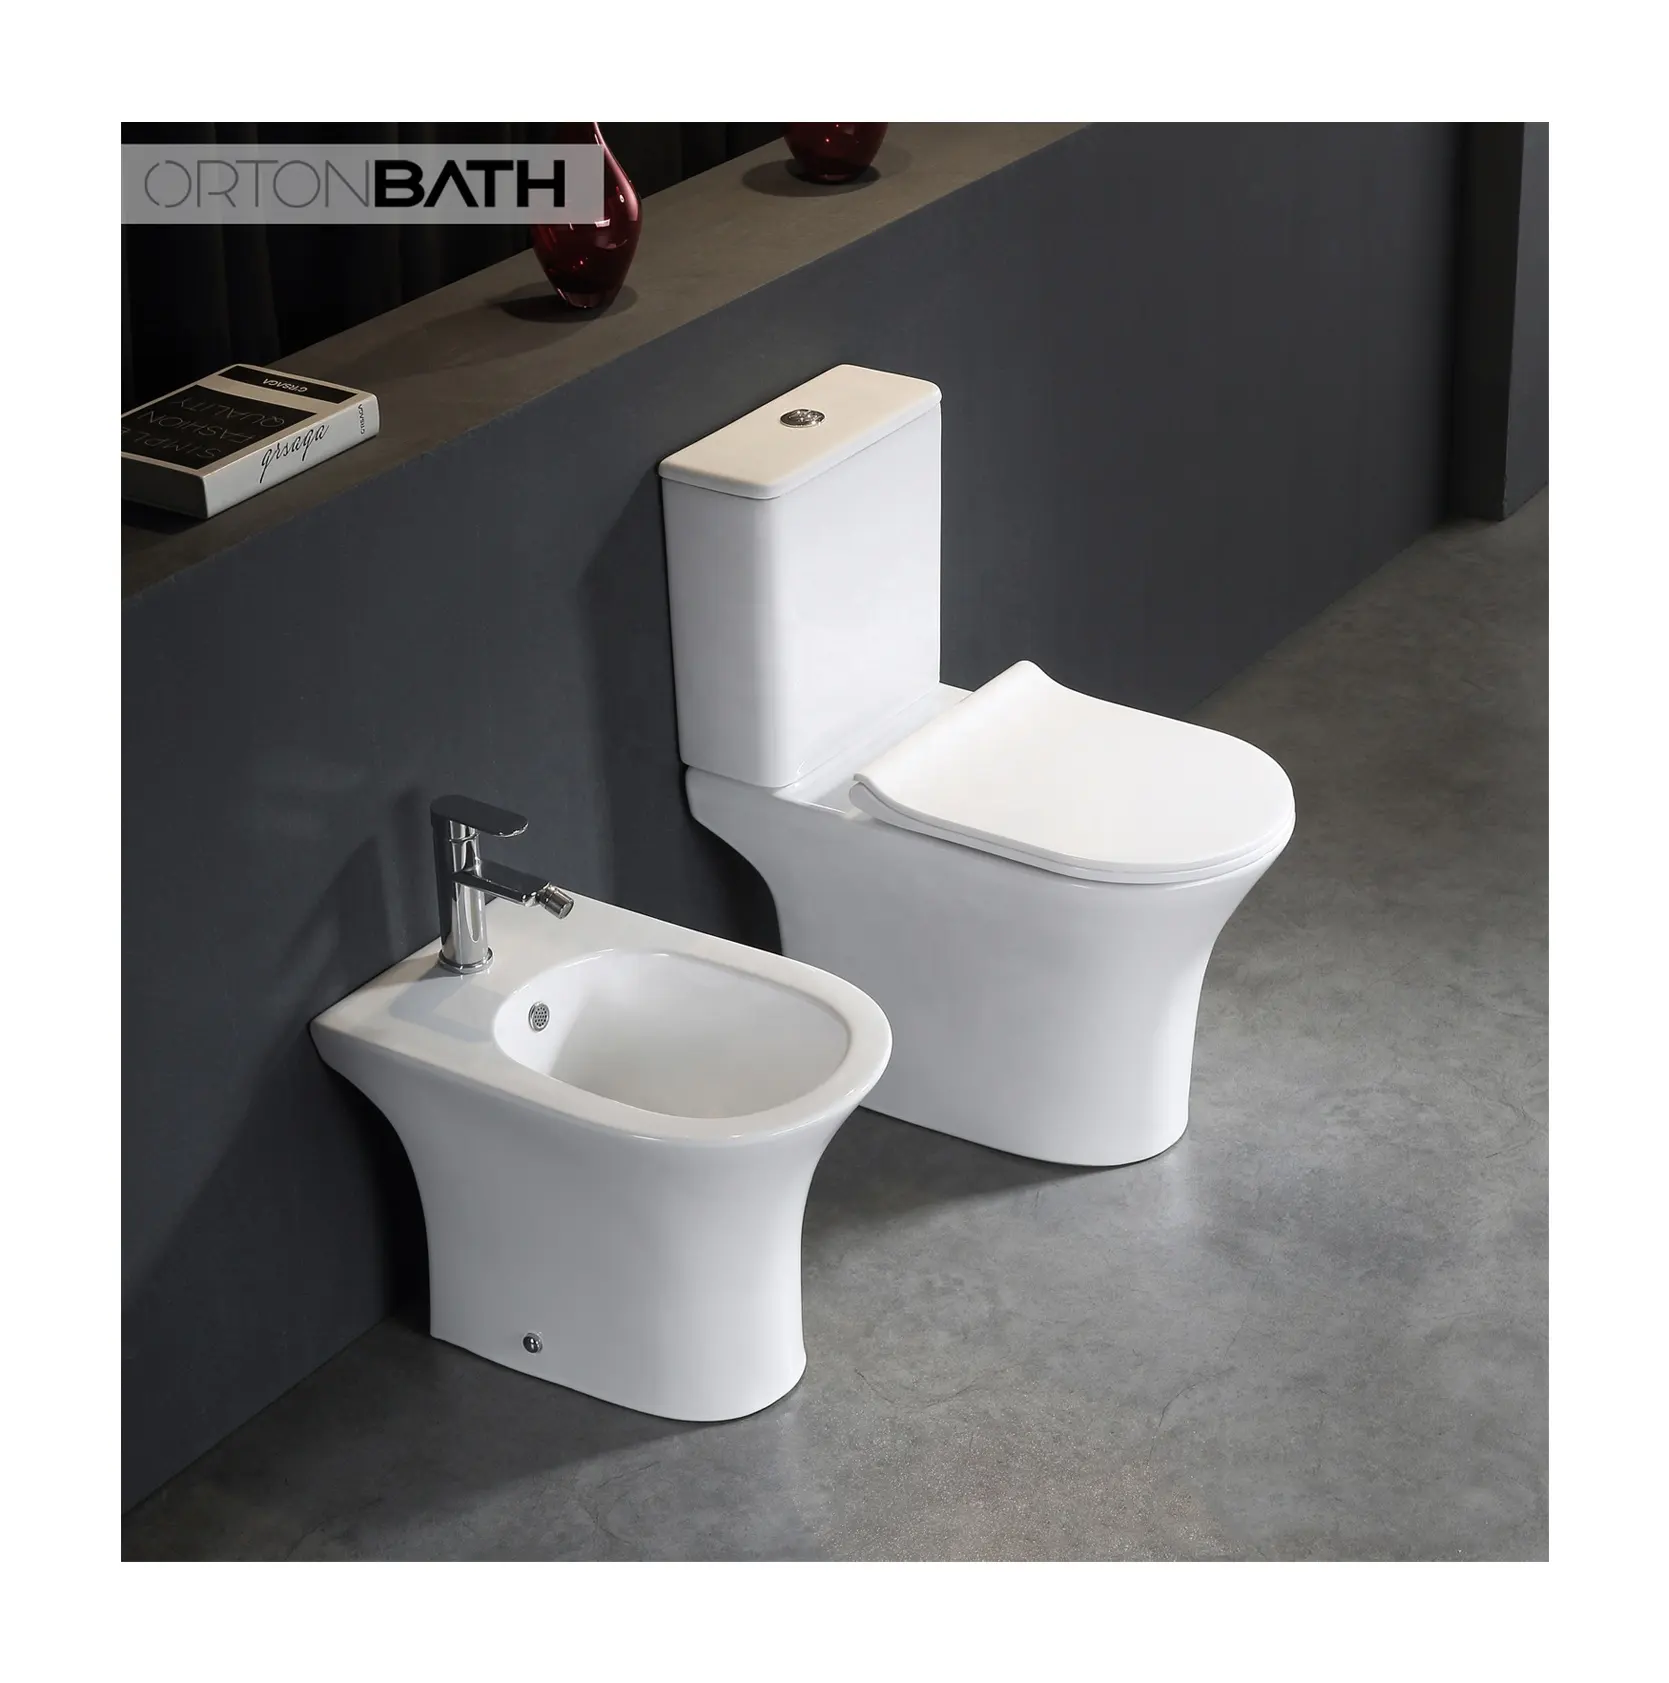 ORTONBATH Toilet bathroom toilet Sanitary Ware Africa Twyford Ghana Ceramic Floor Mounted Dual-flush Two Piece Wc Toilet Bowl